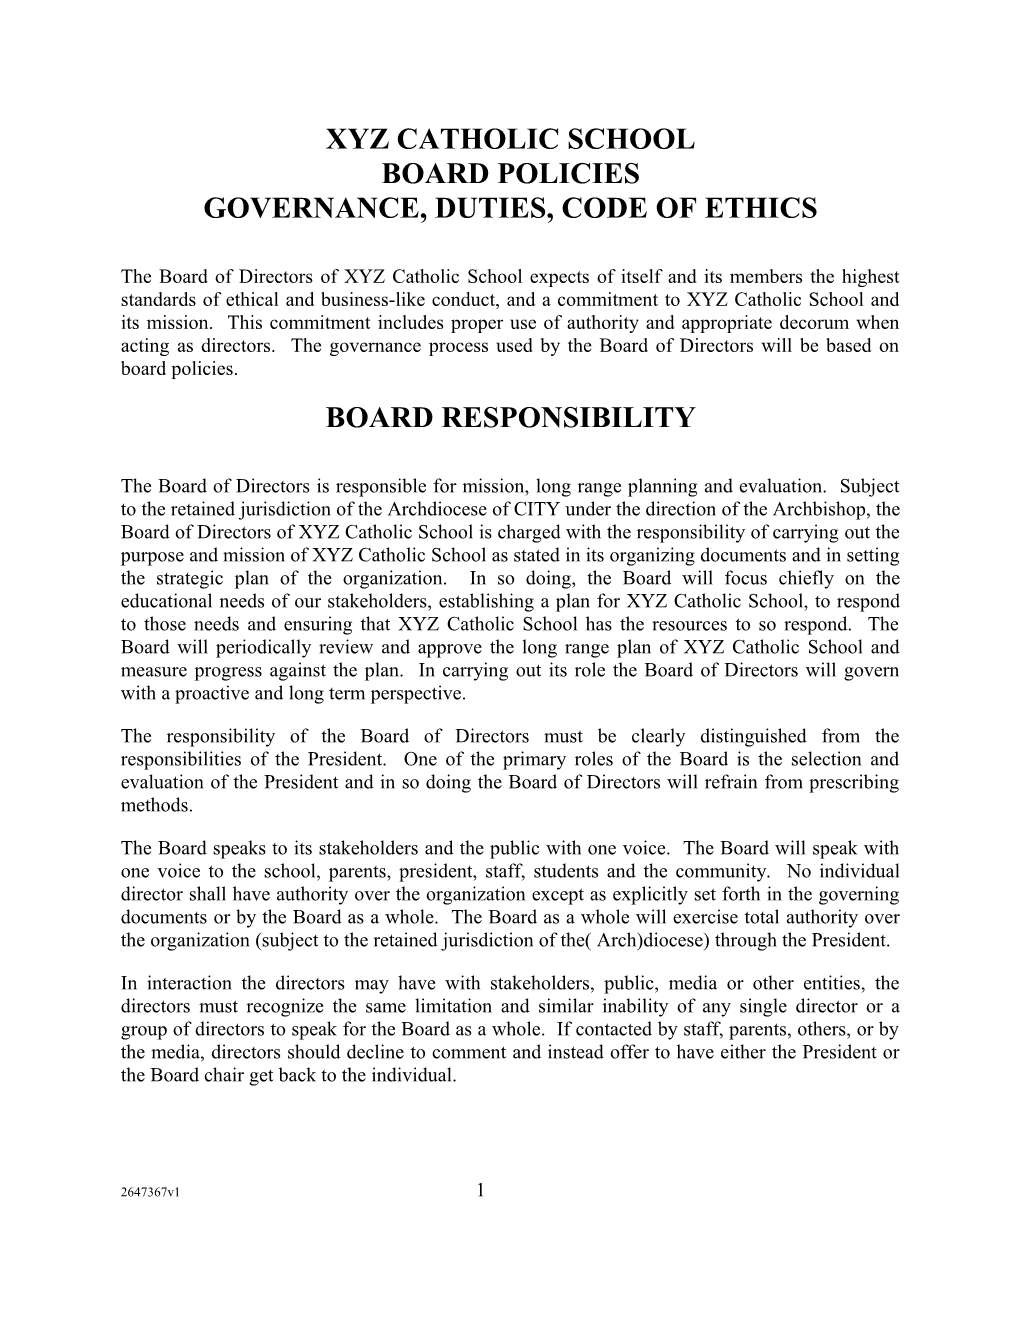 XYZ Catholic School Board Policies Governance, Duties, Code of Ethics